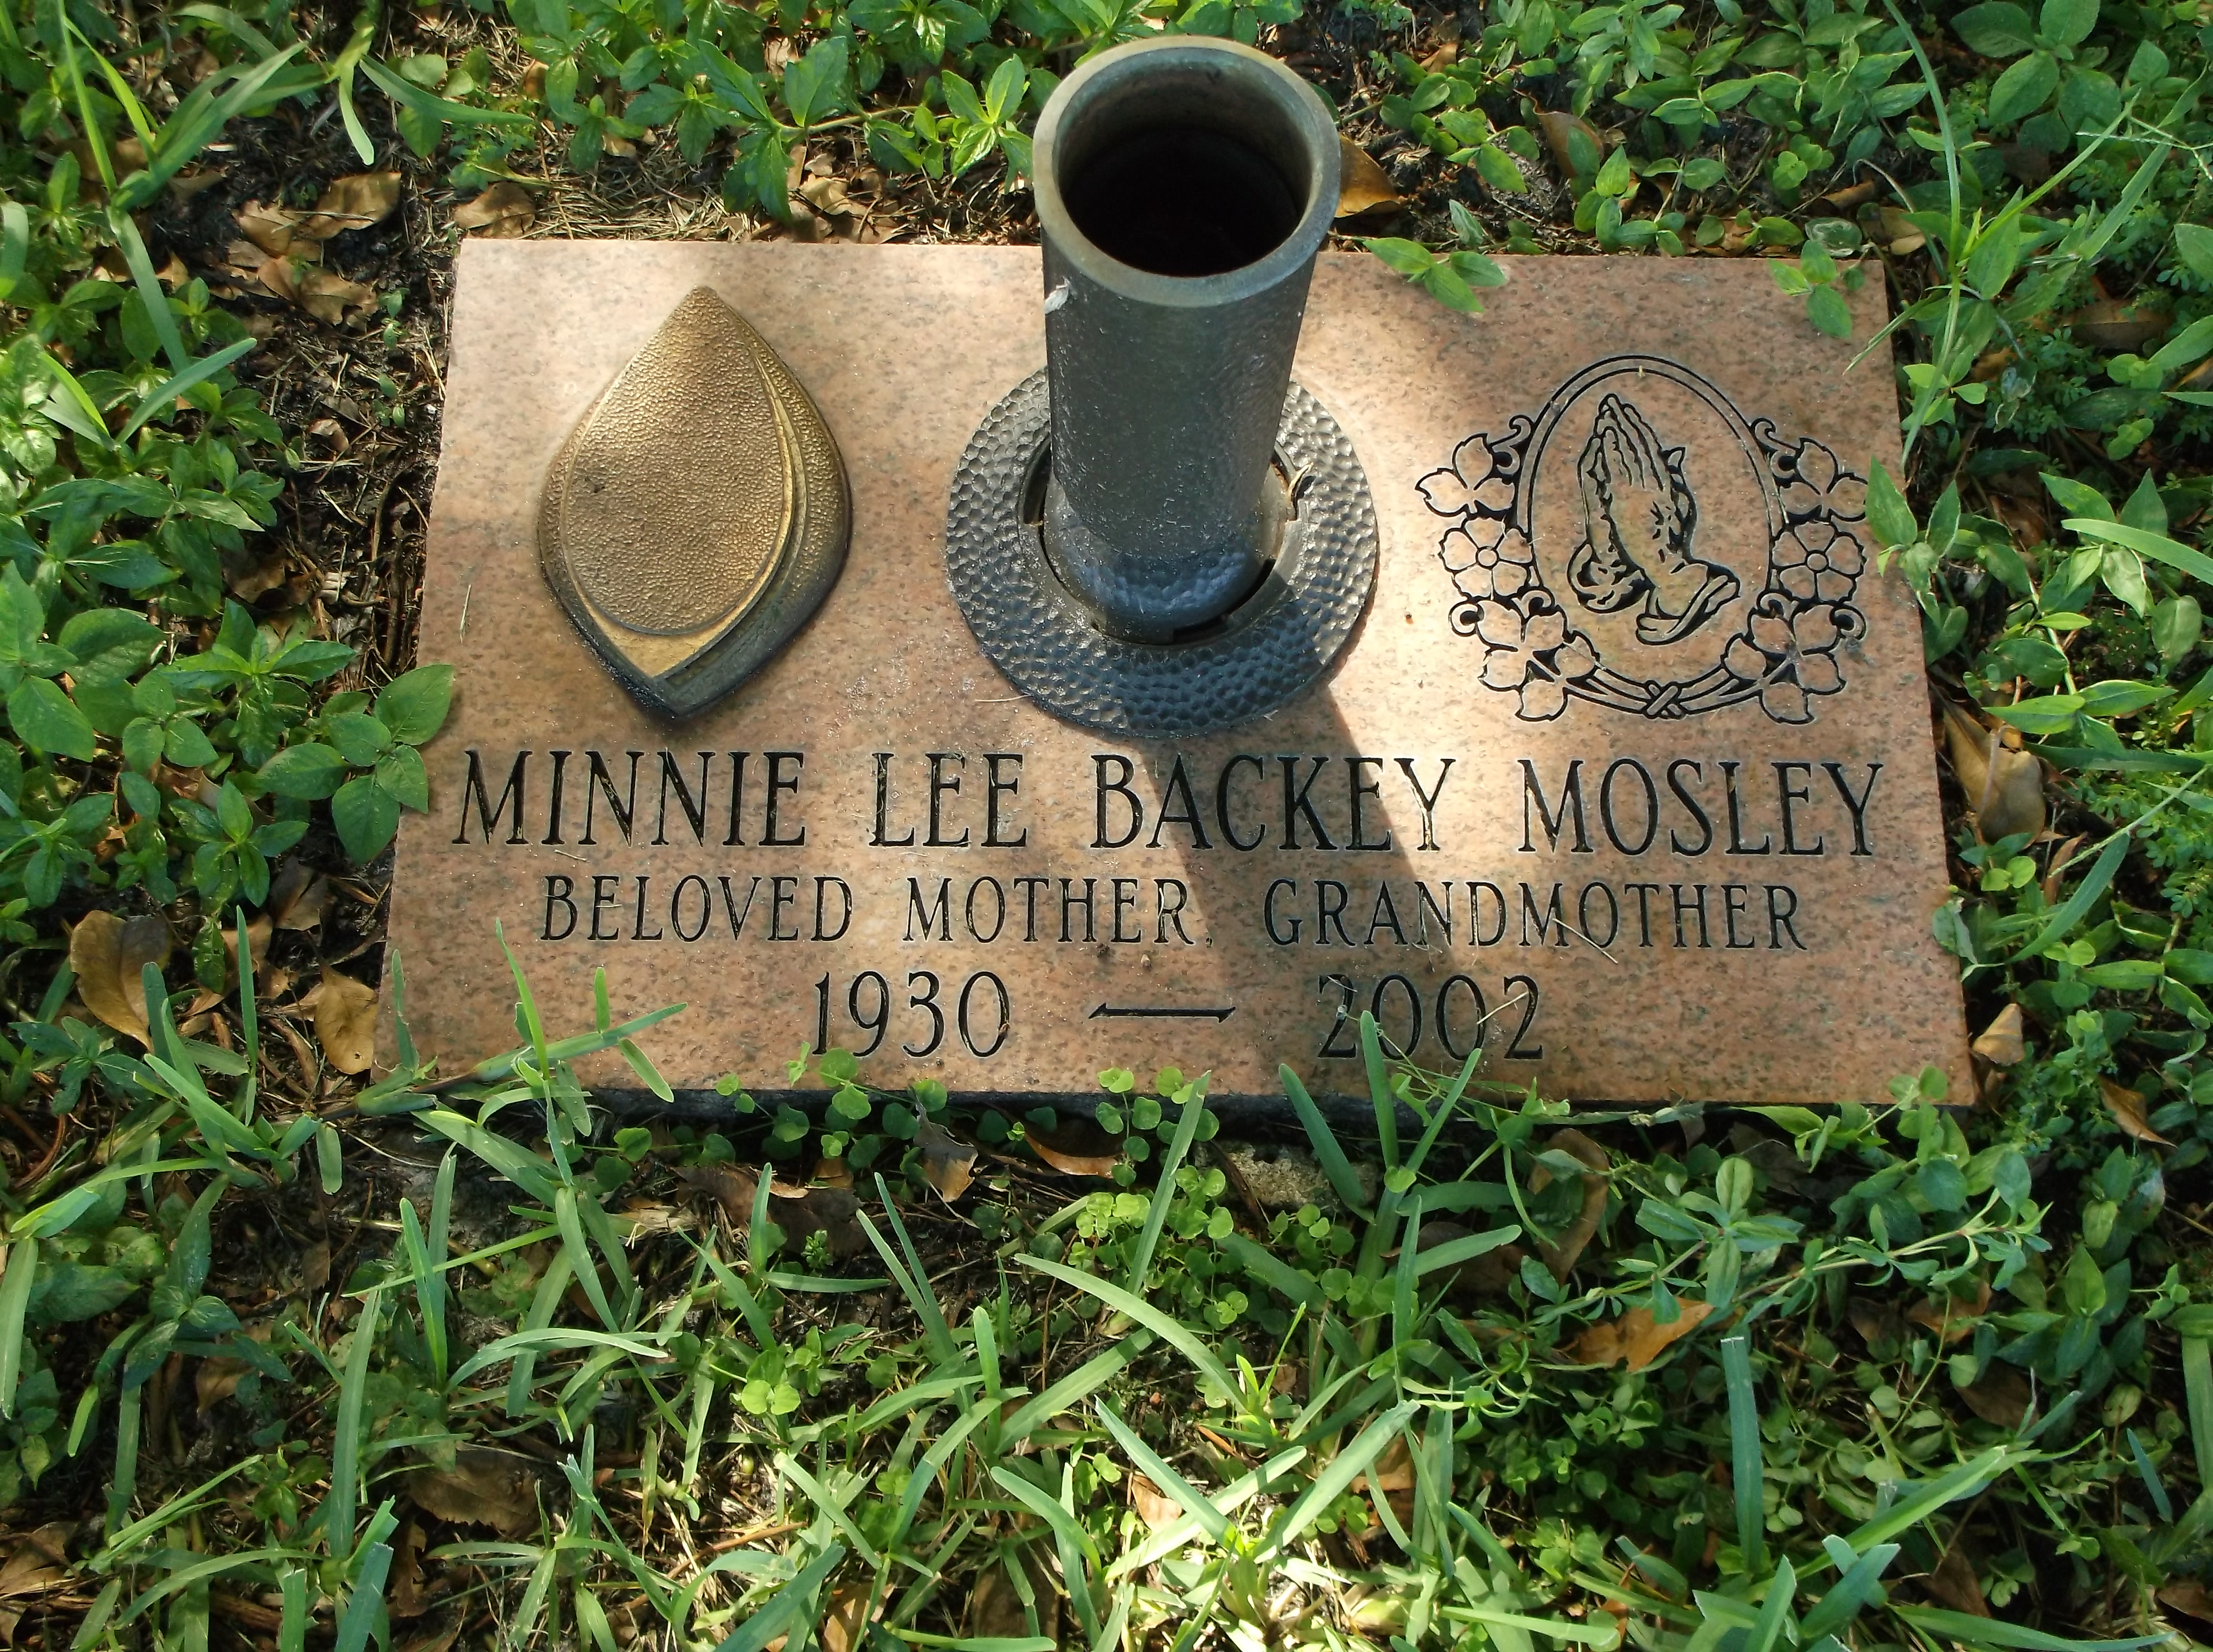 Minnie Lee Backey Mosley